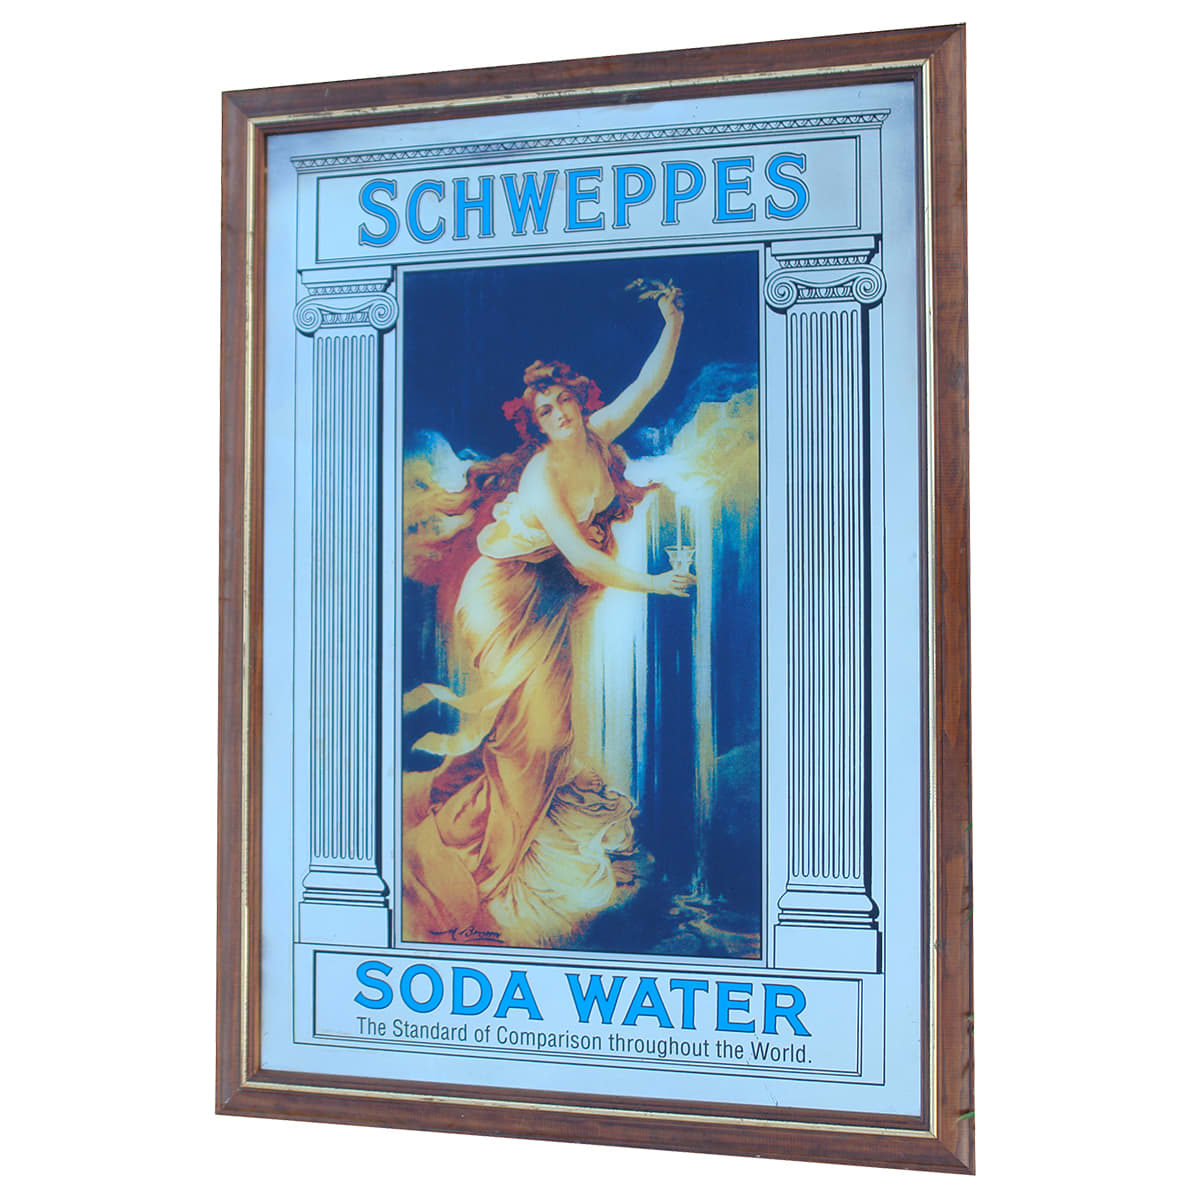 Mirror. Schweppes Soda Water. Woman/Goddess Pictorial. 1970s.